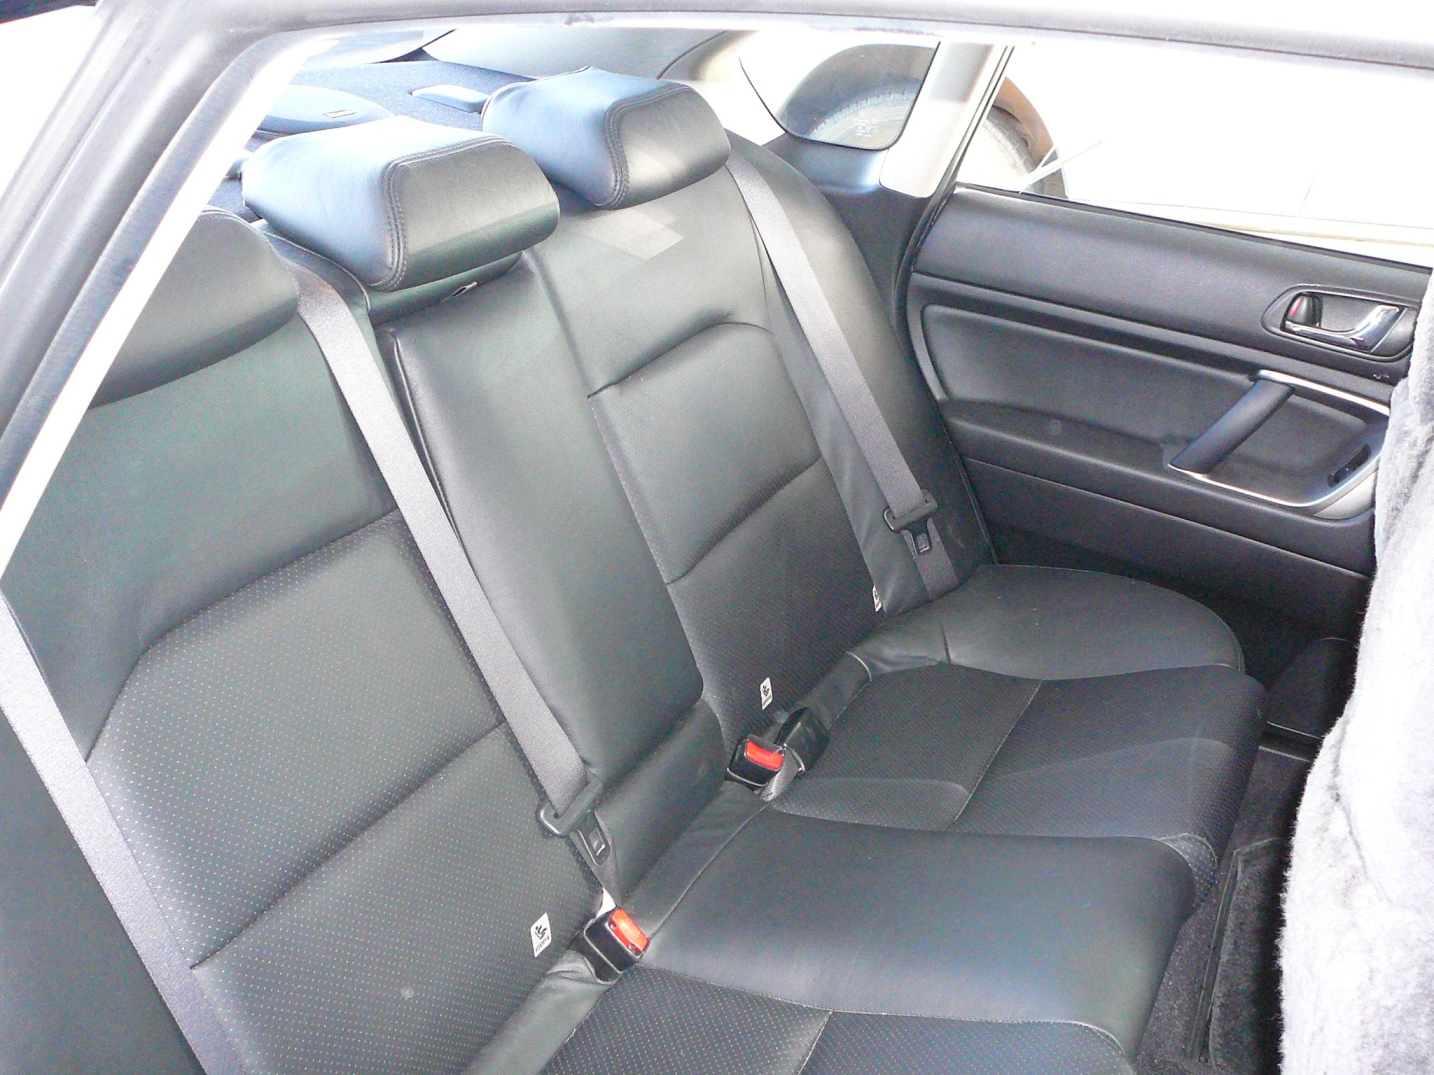 Subaru Liberty 2006, custom made sheepskin rear seat covers